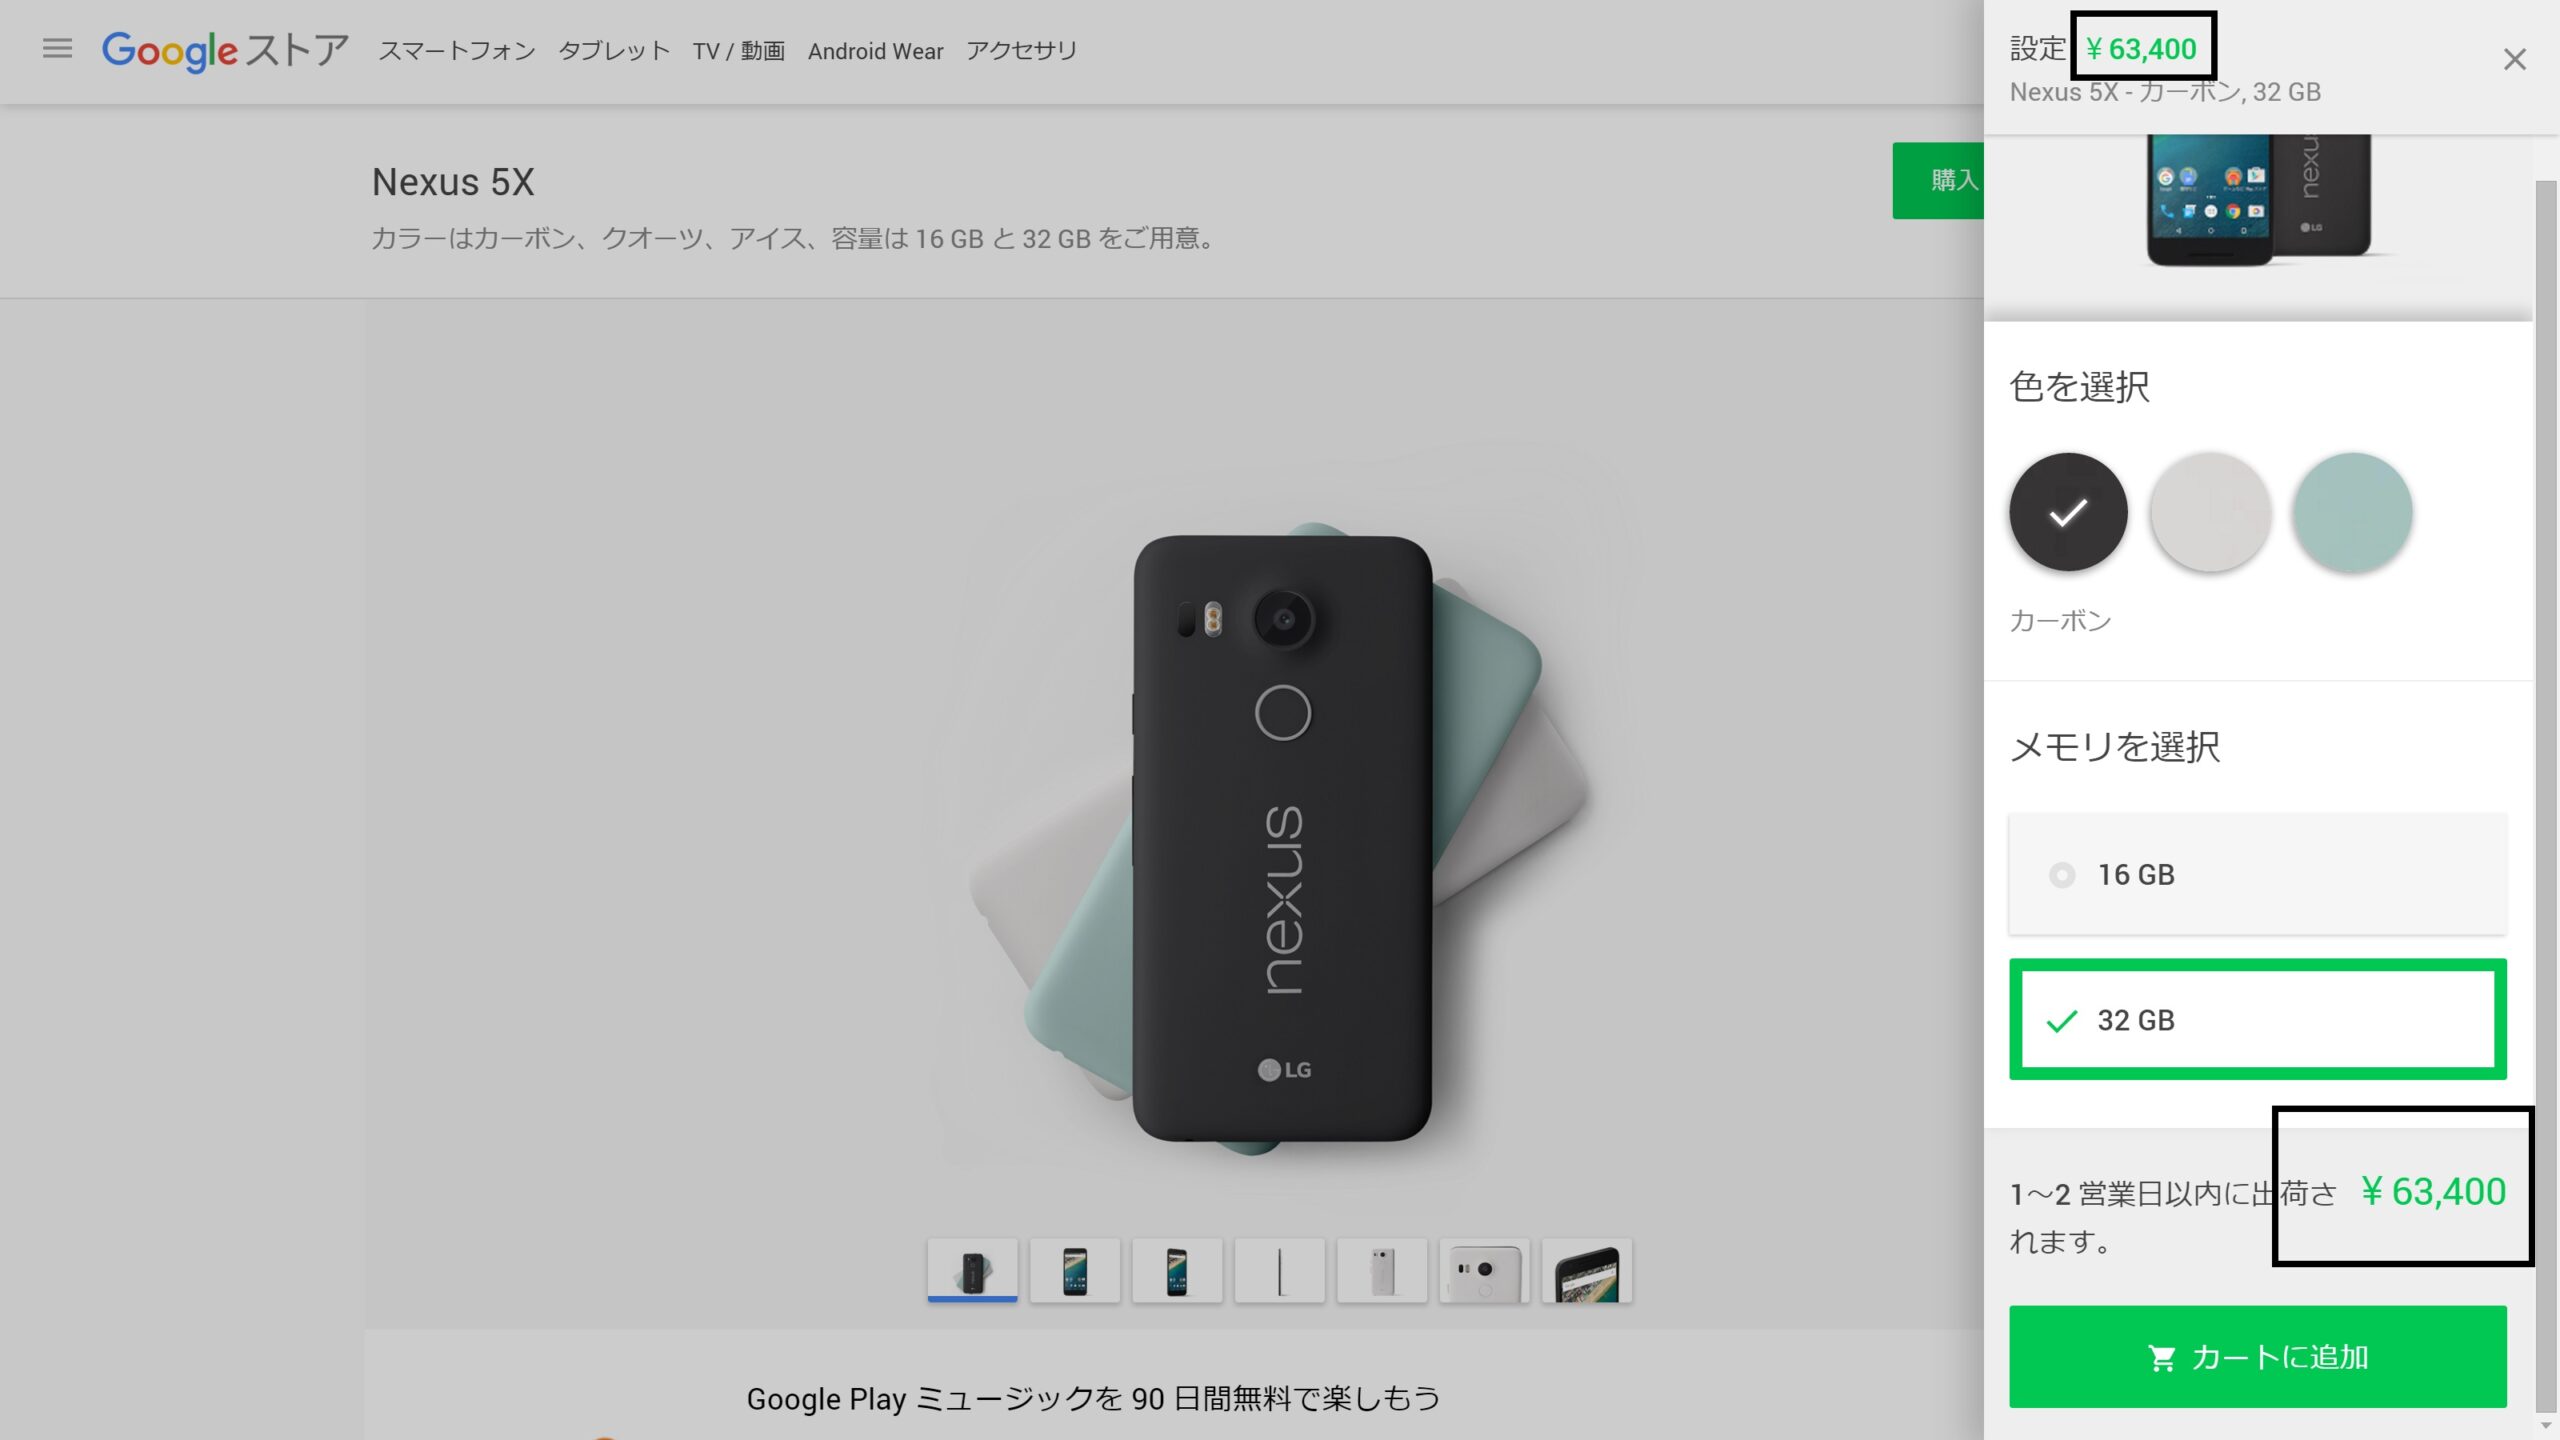 Nexus 5X Google Store Japan